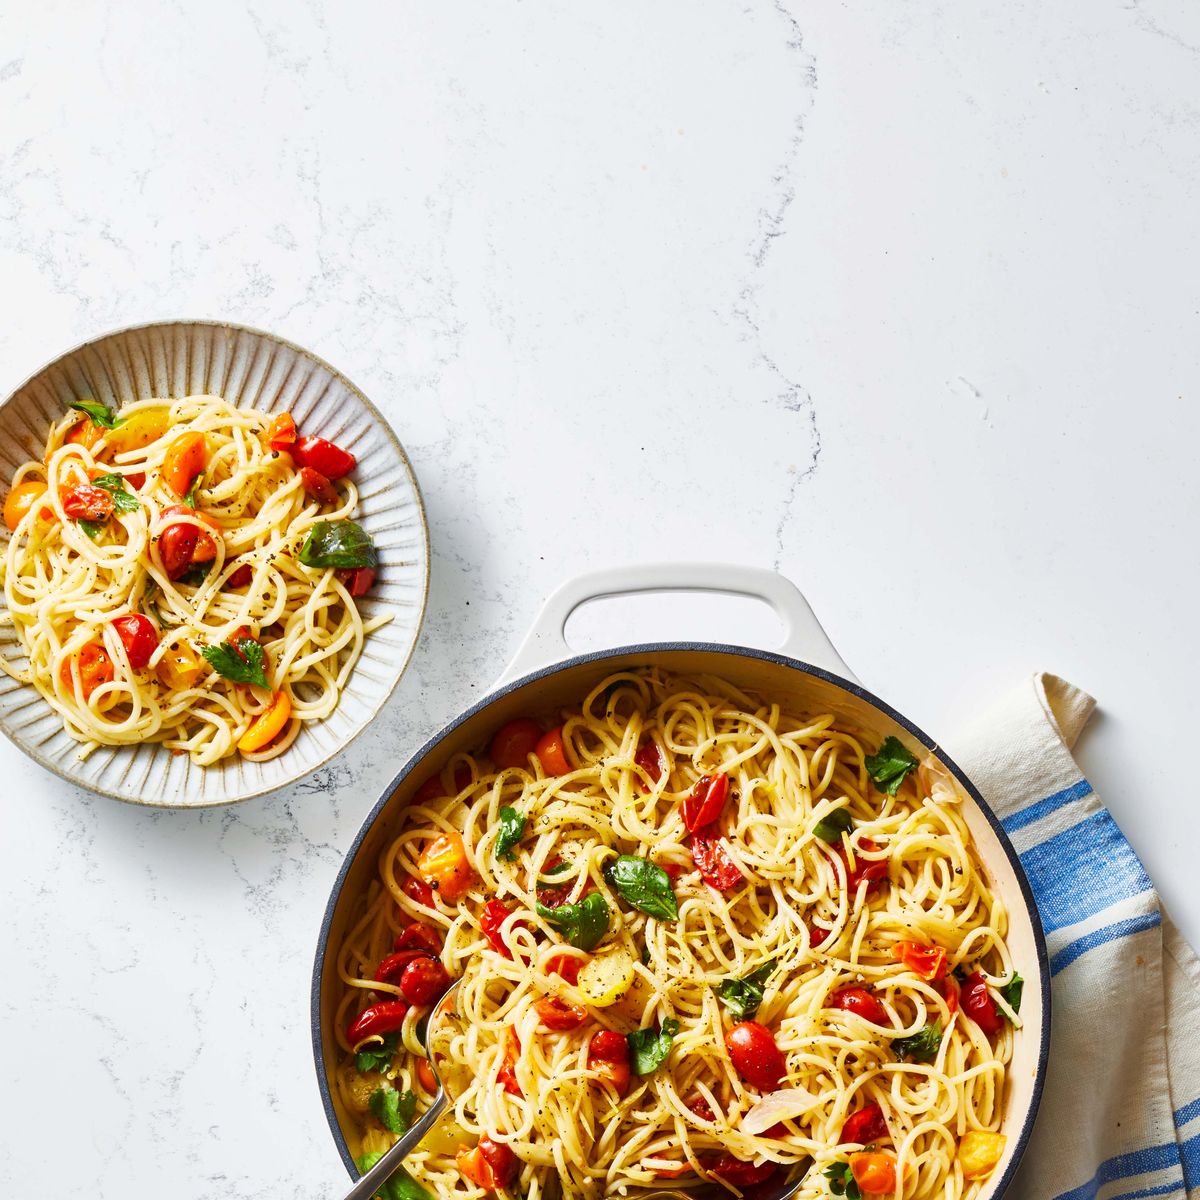 Best One-Pot Spaghetti Recipe - How To Make One-Pot Spaghetti